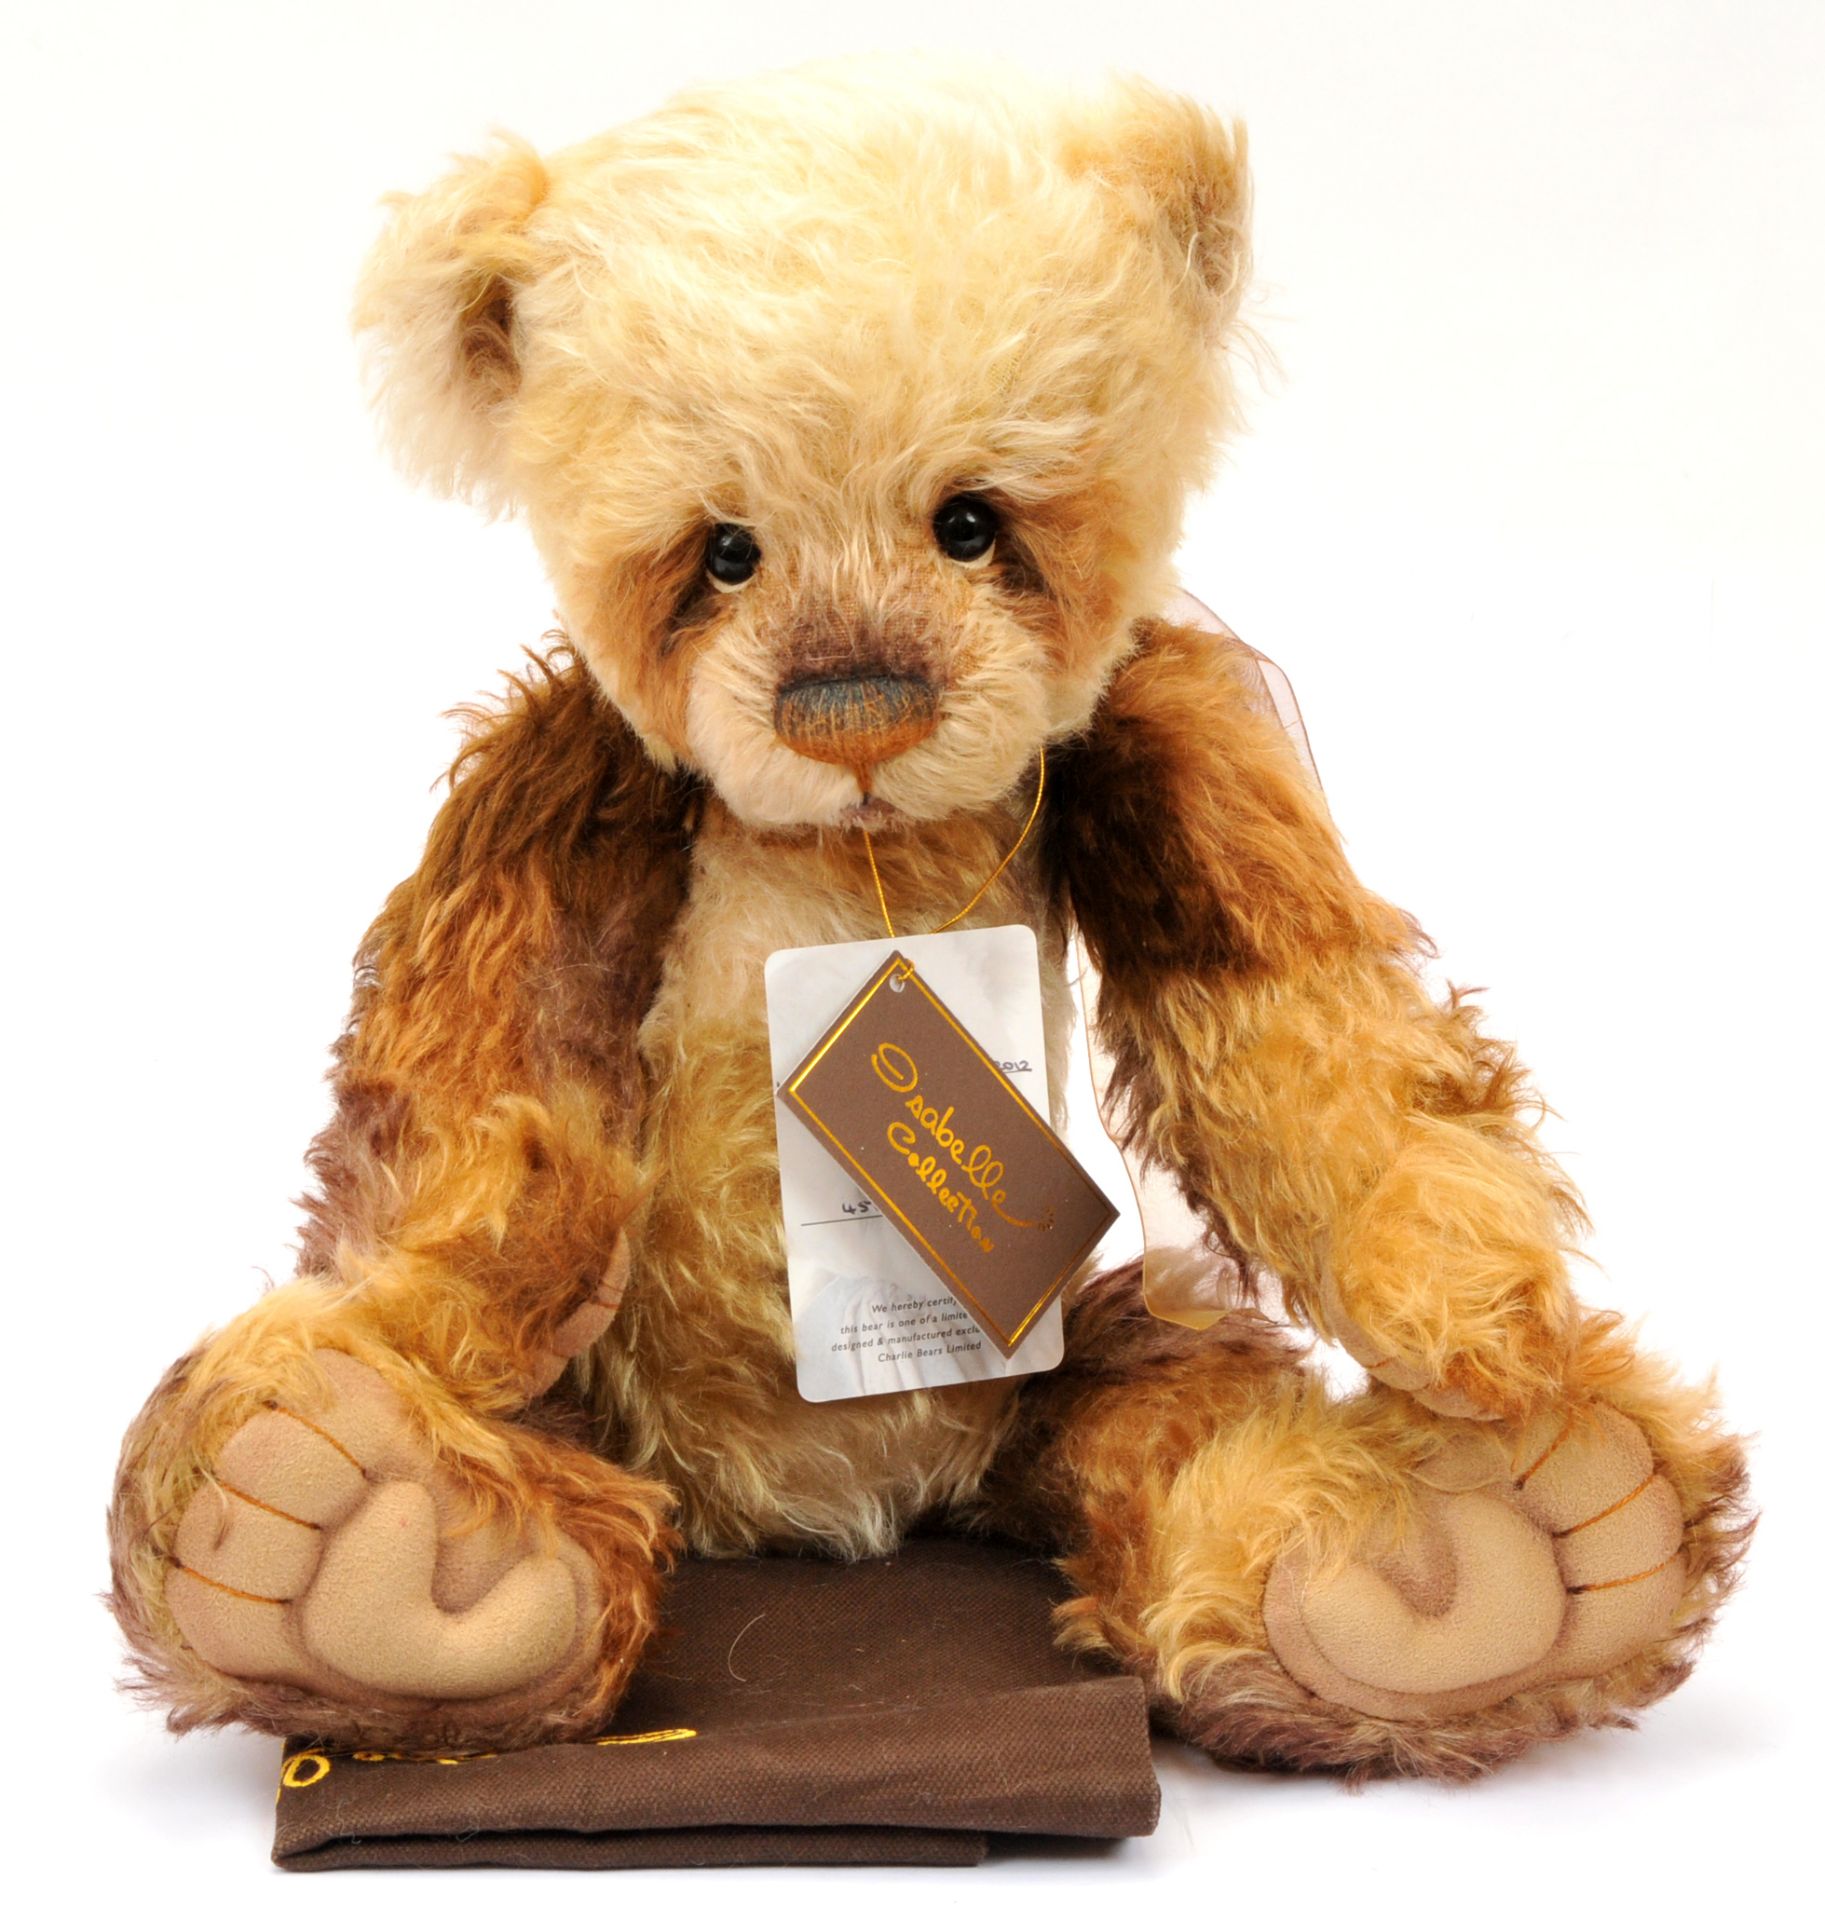 Charlie Bears Isabelle Masterpiece 2012 teddy bear